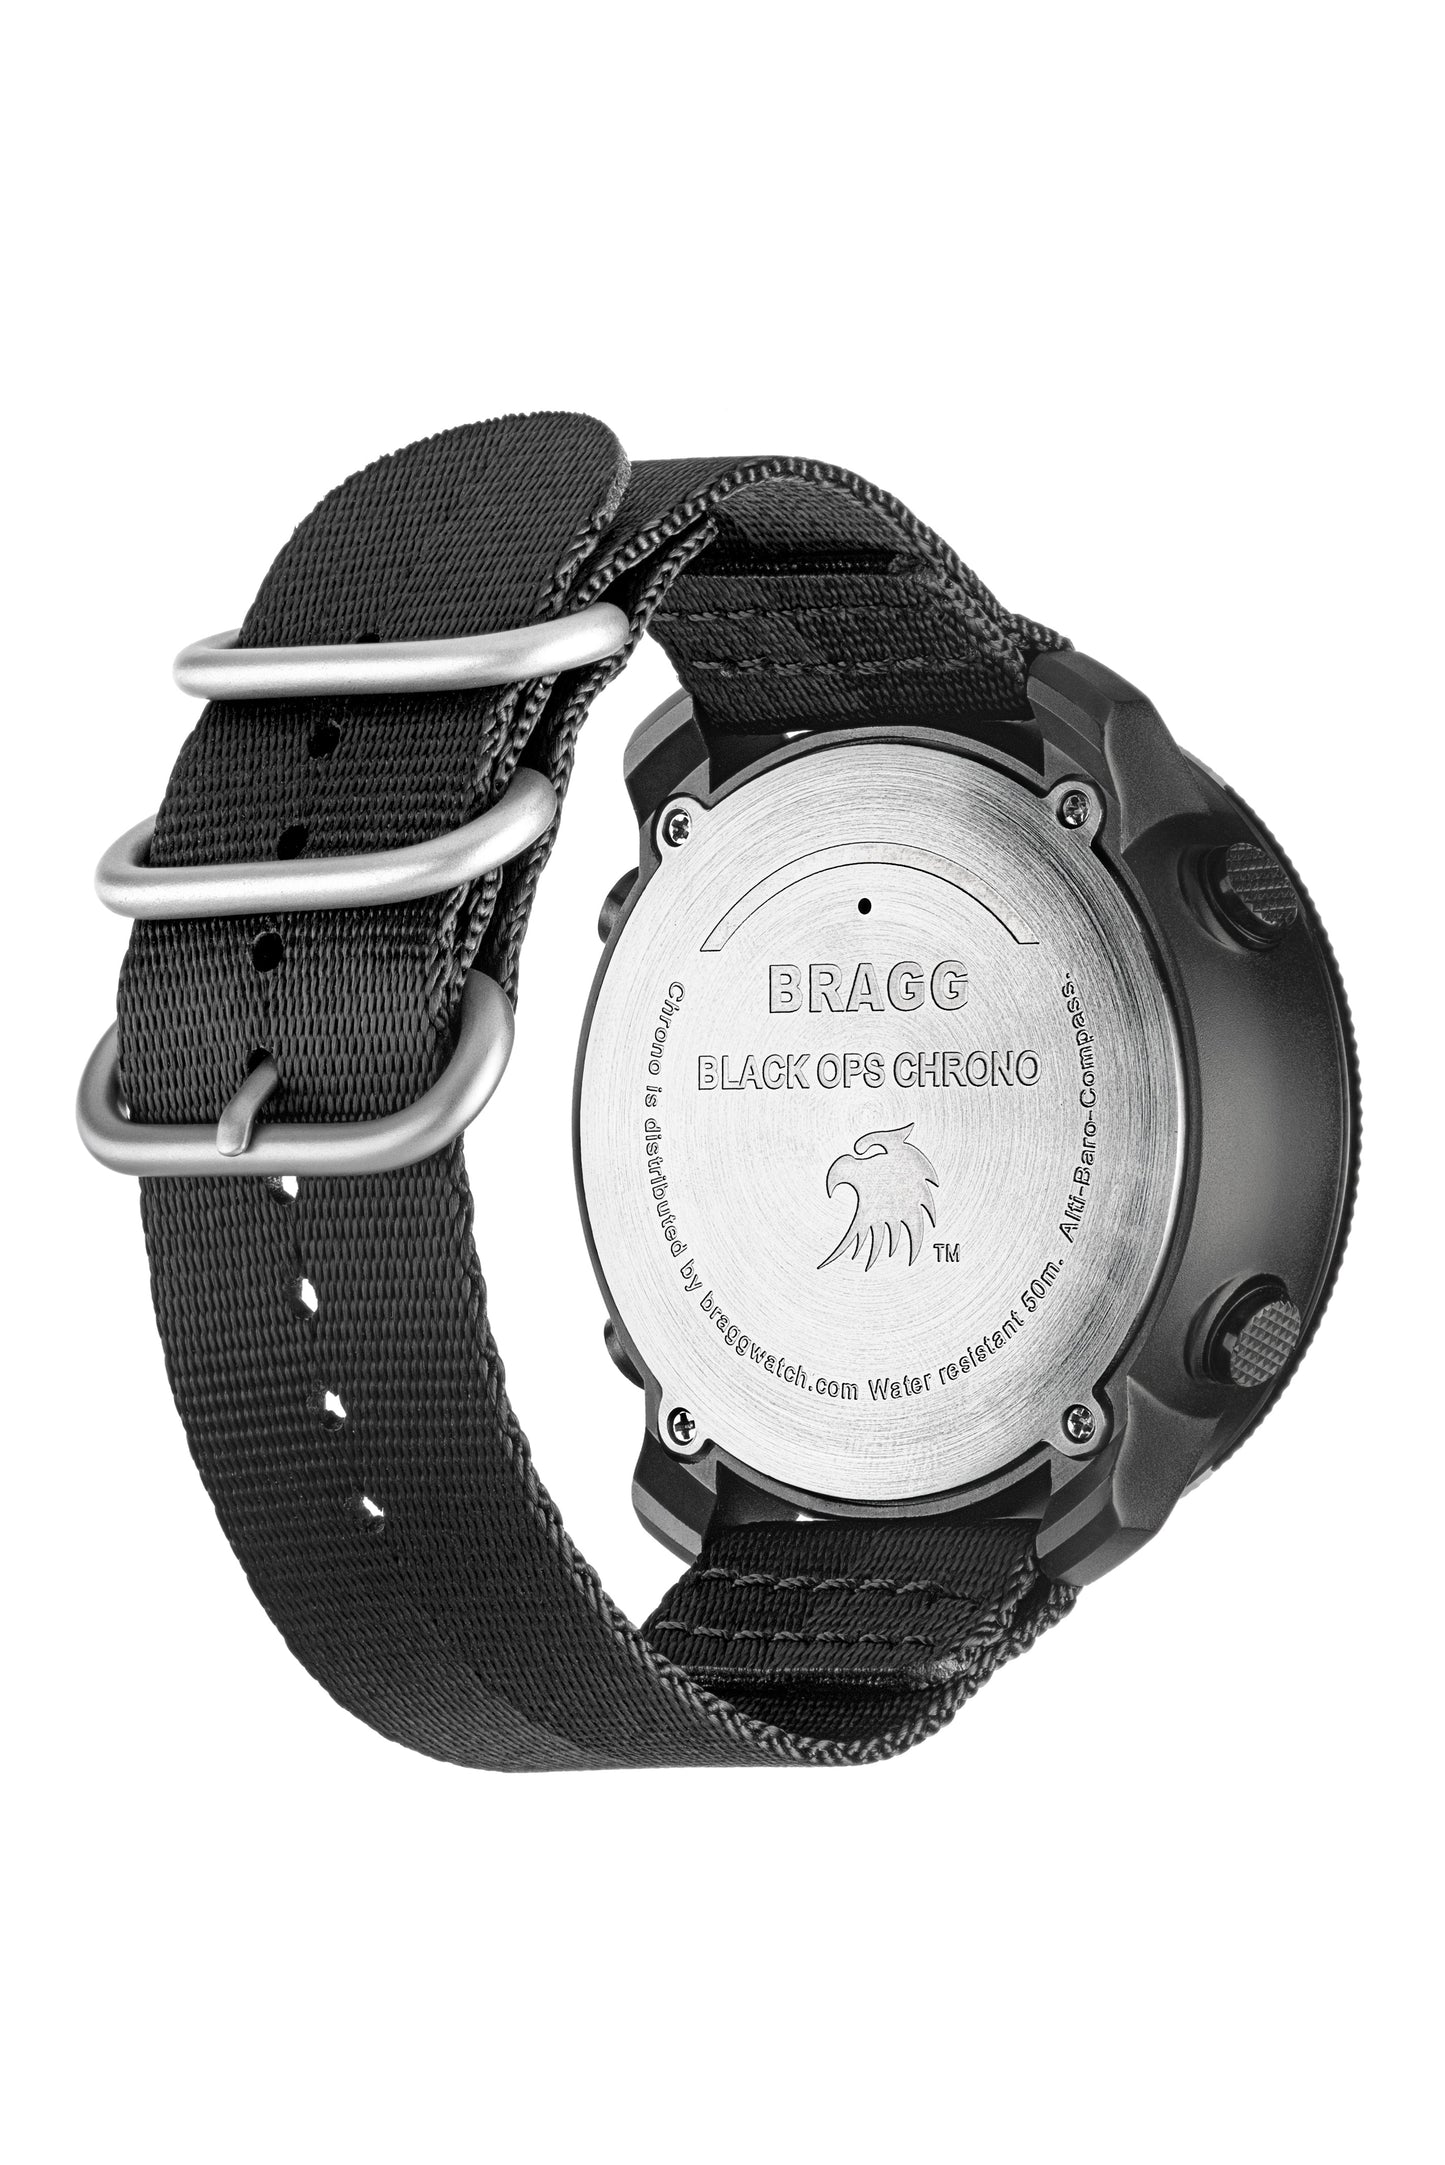 Bragg Black Ops Chrono watch with Black Nato Band Military Sports Digital Watch Bragg Watch 